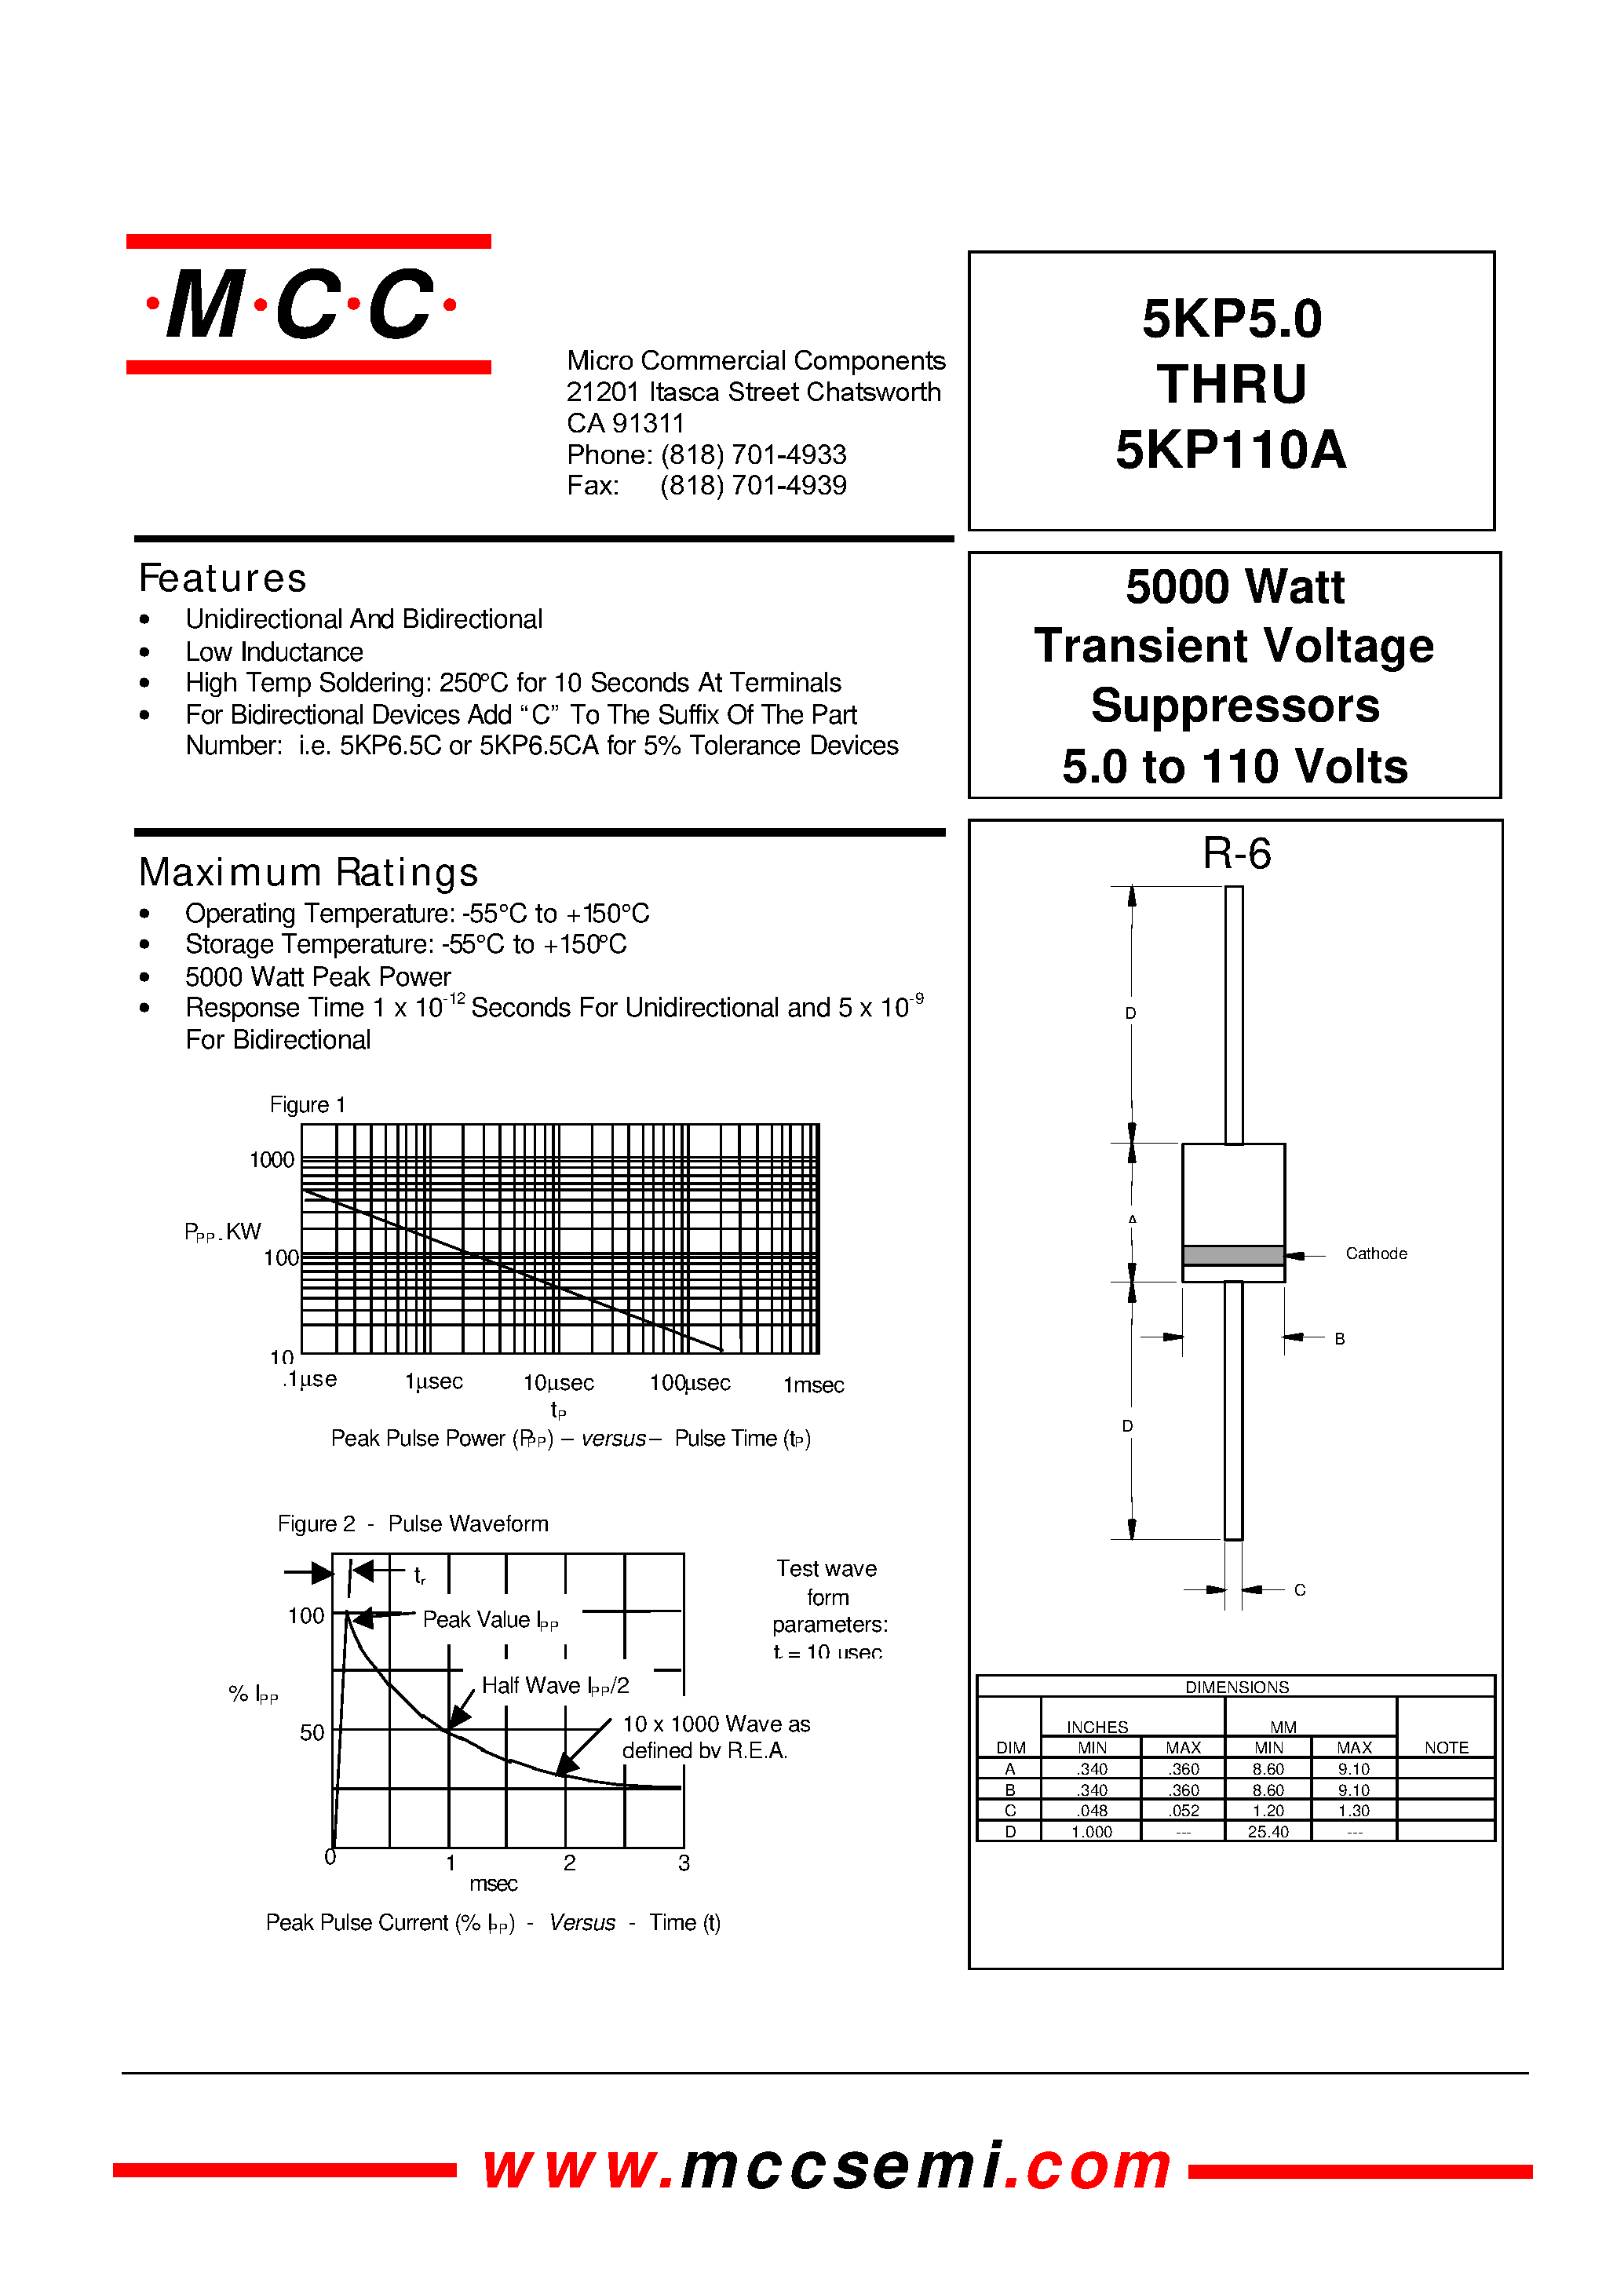 Даташит 5KP6.5-5000 Watt Transient Voltage Suppressors 5.0 to 110 Volts страница 1